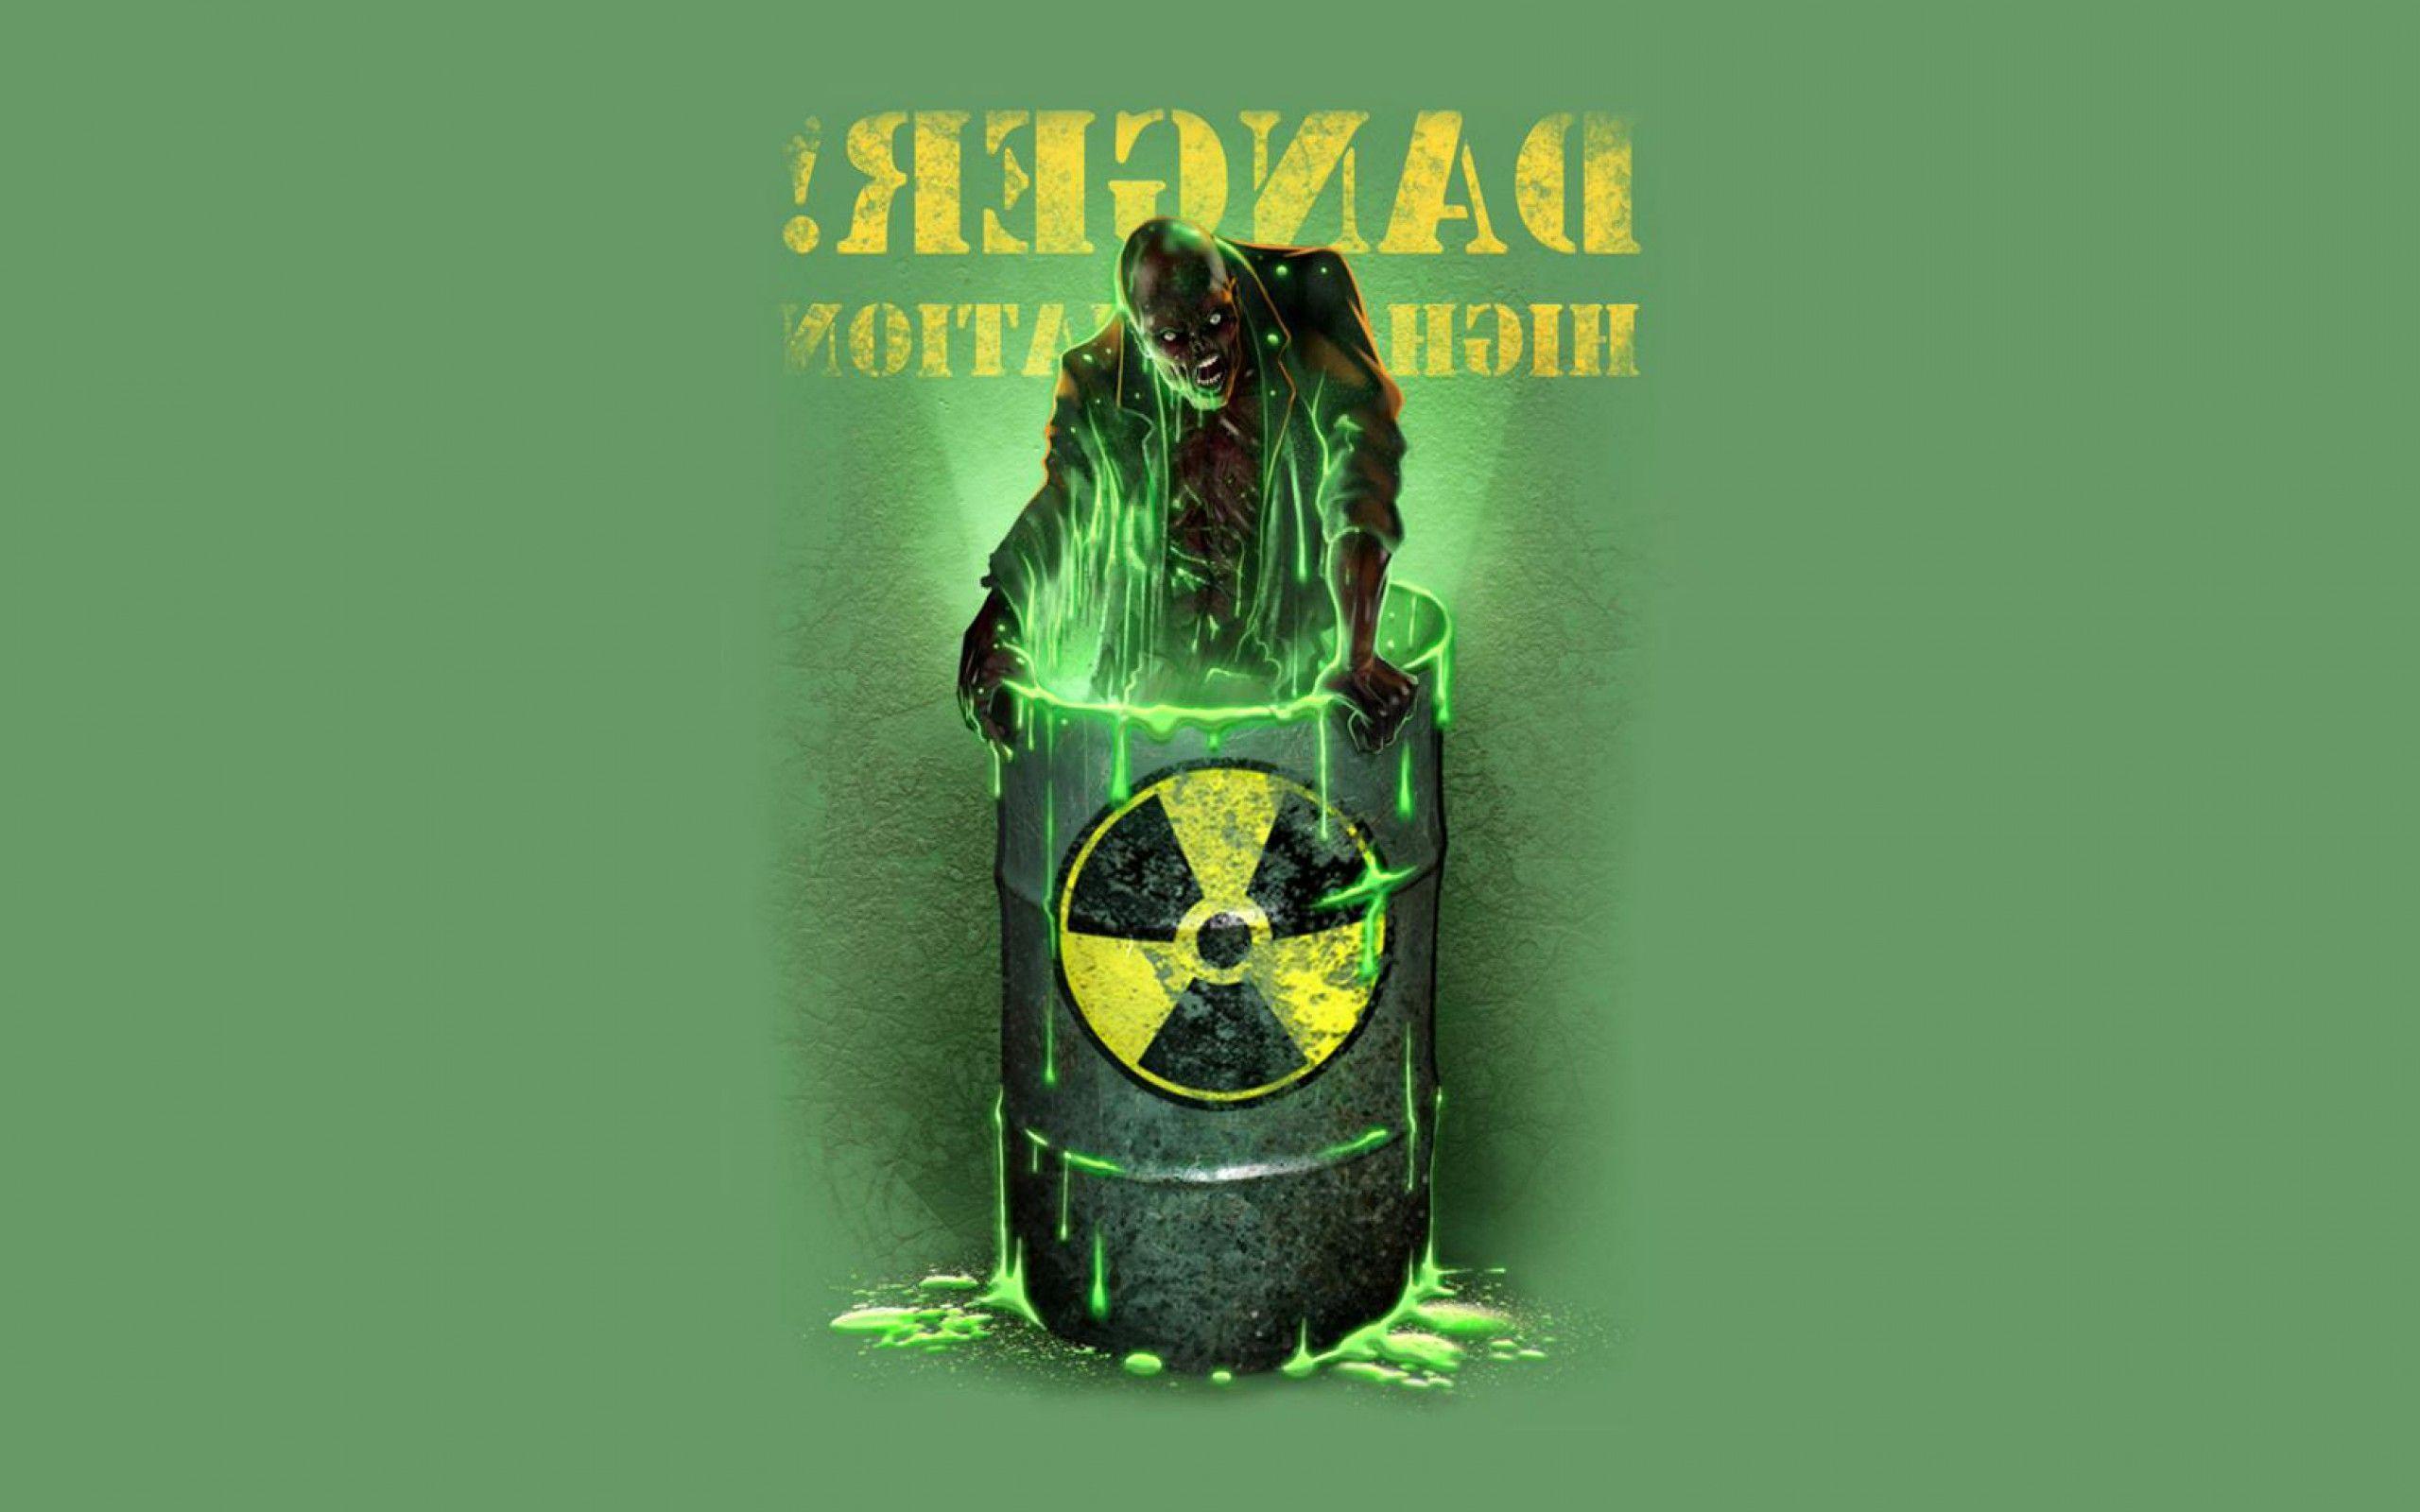 Miscellaneous Digital Art Radioactive Danger High Radiation